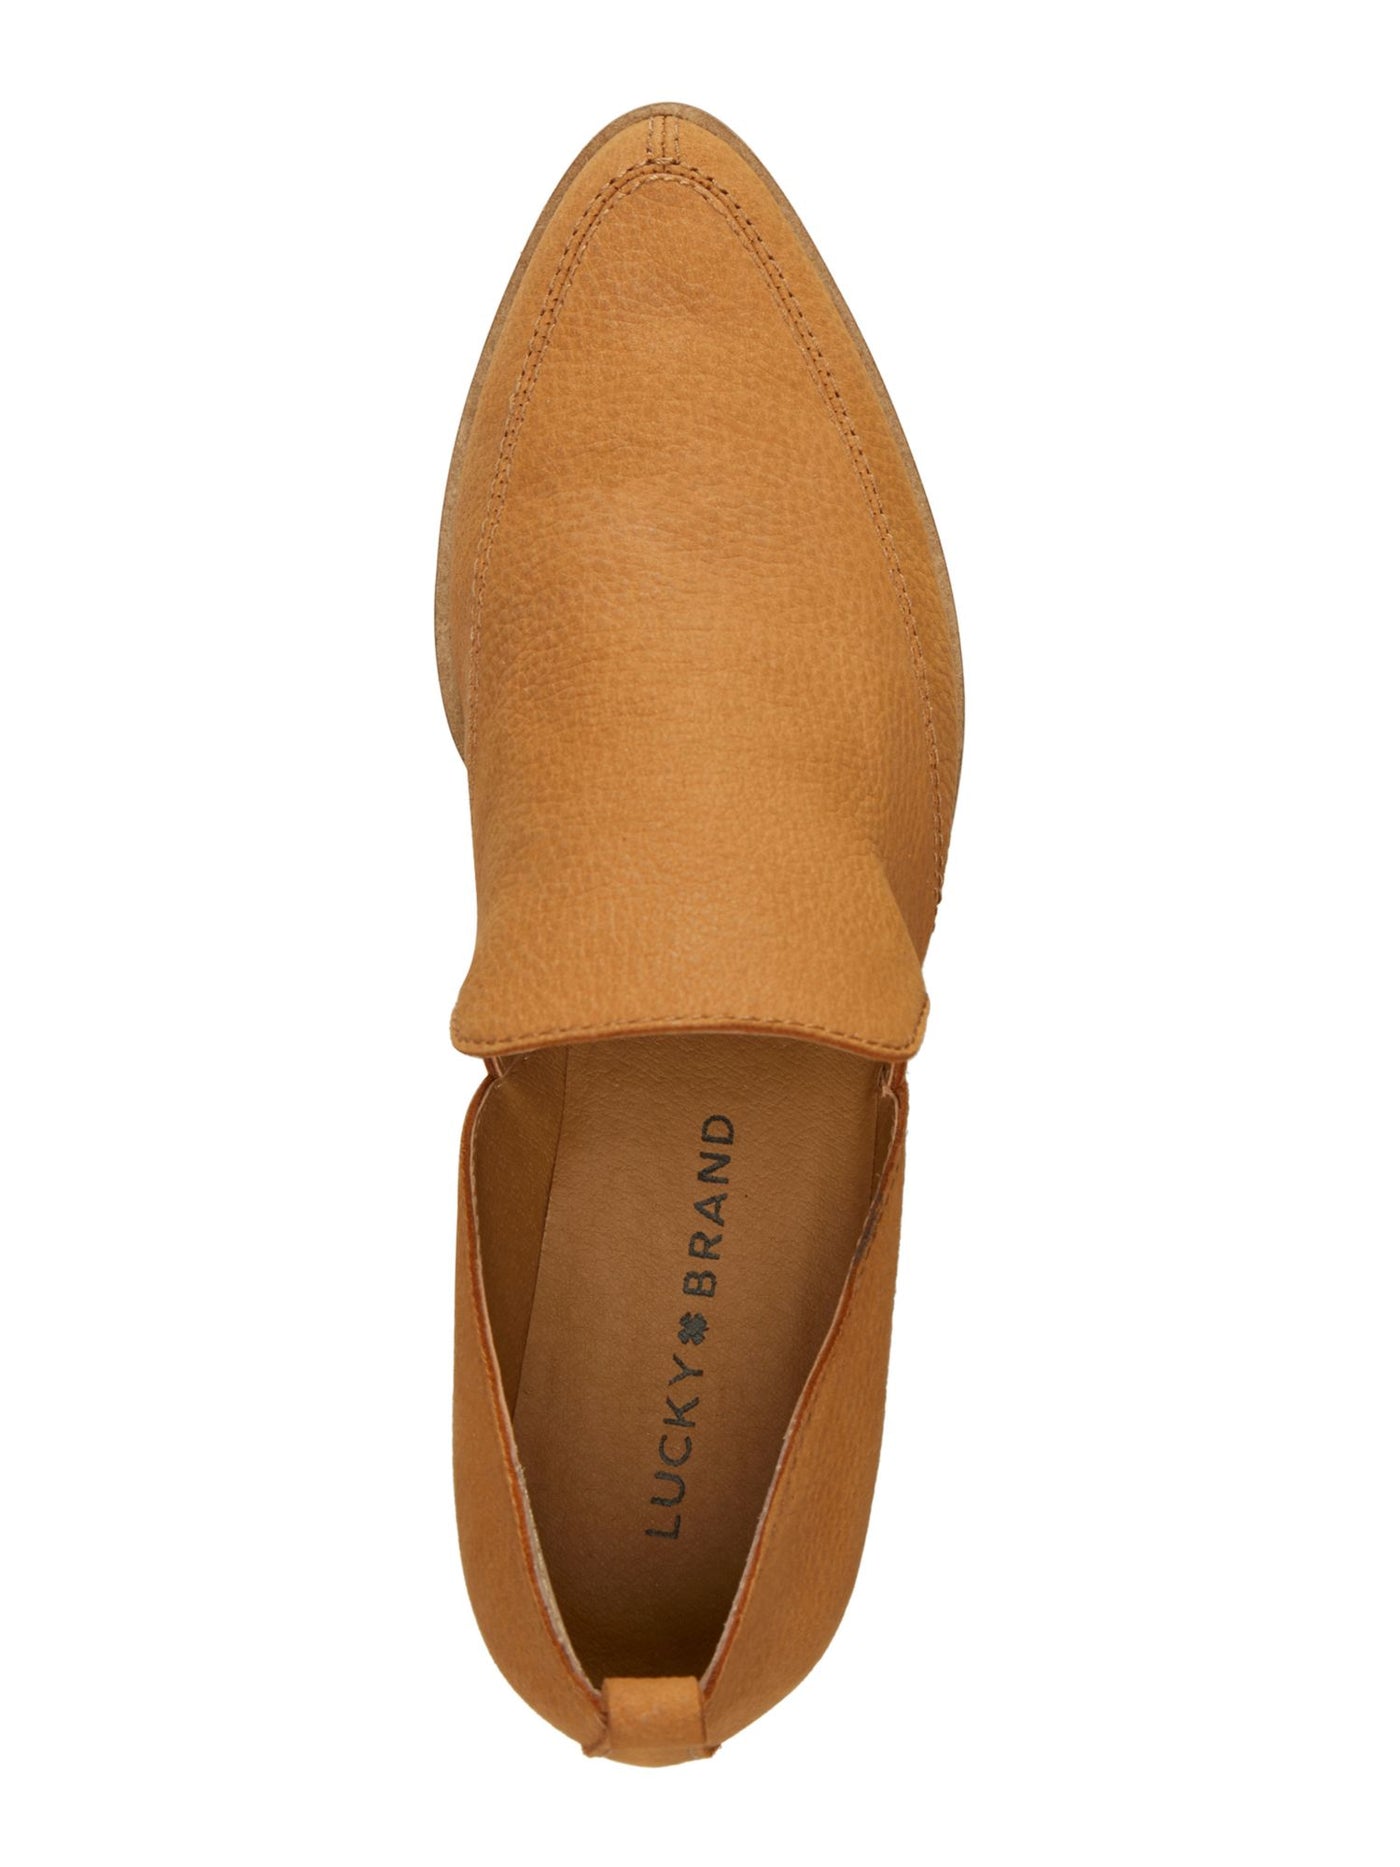 LUCKY BRAND Womens Brown Side Cutouts Padded Lug Sole Mahzan Almond Toe Block Heel Slip On Leather Flats Shoes 8.5 M